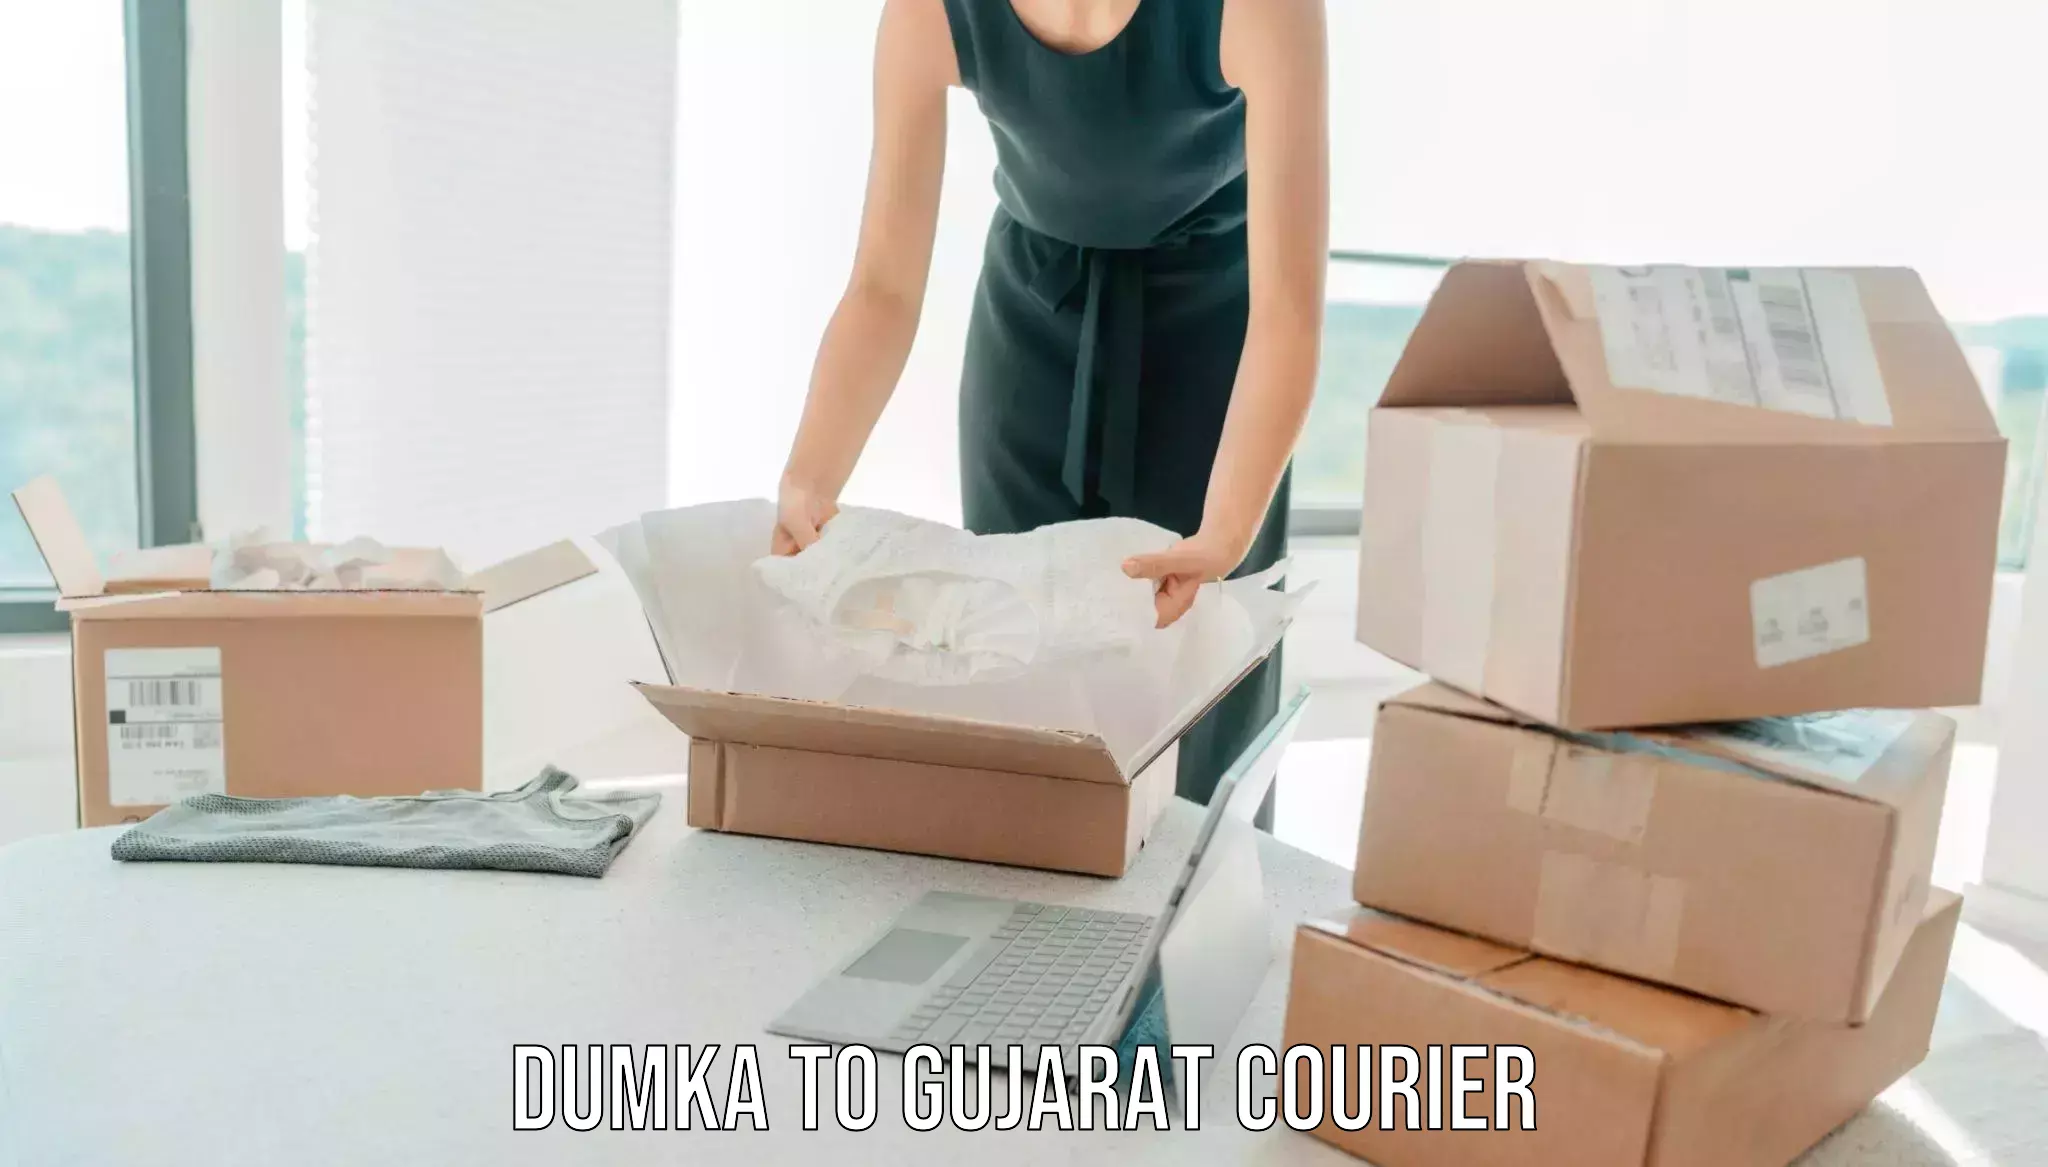 Furniture delivery service Dumka to Gujarat